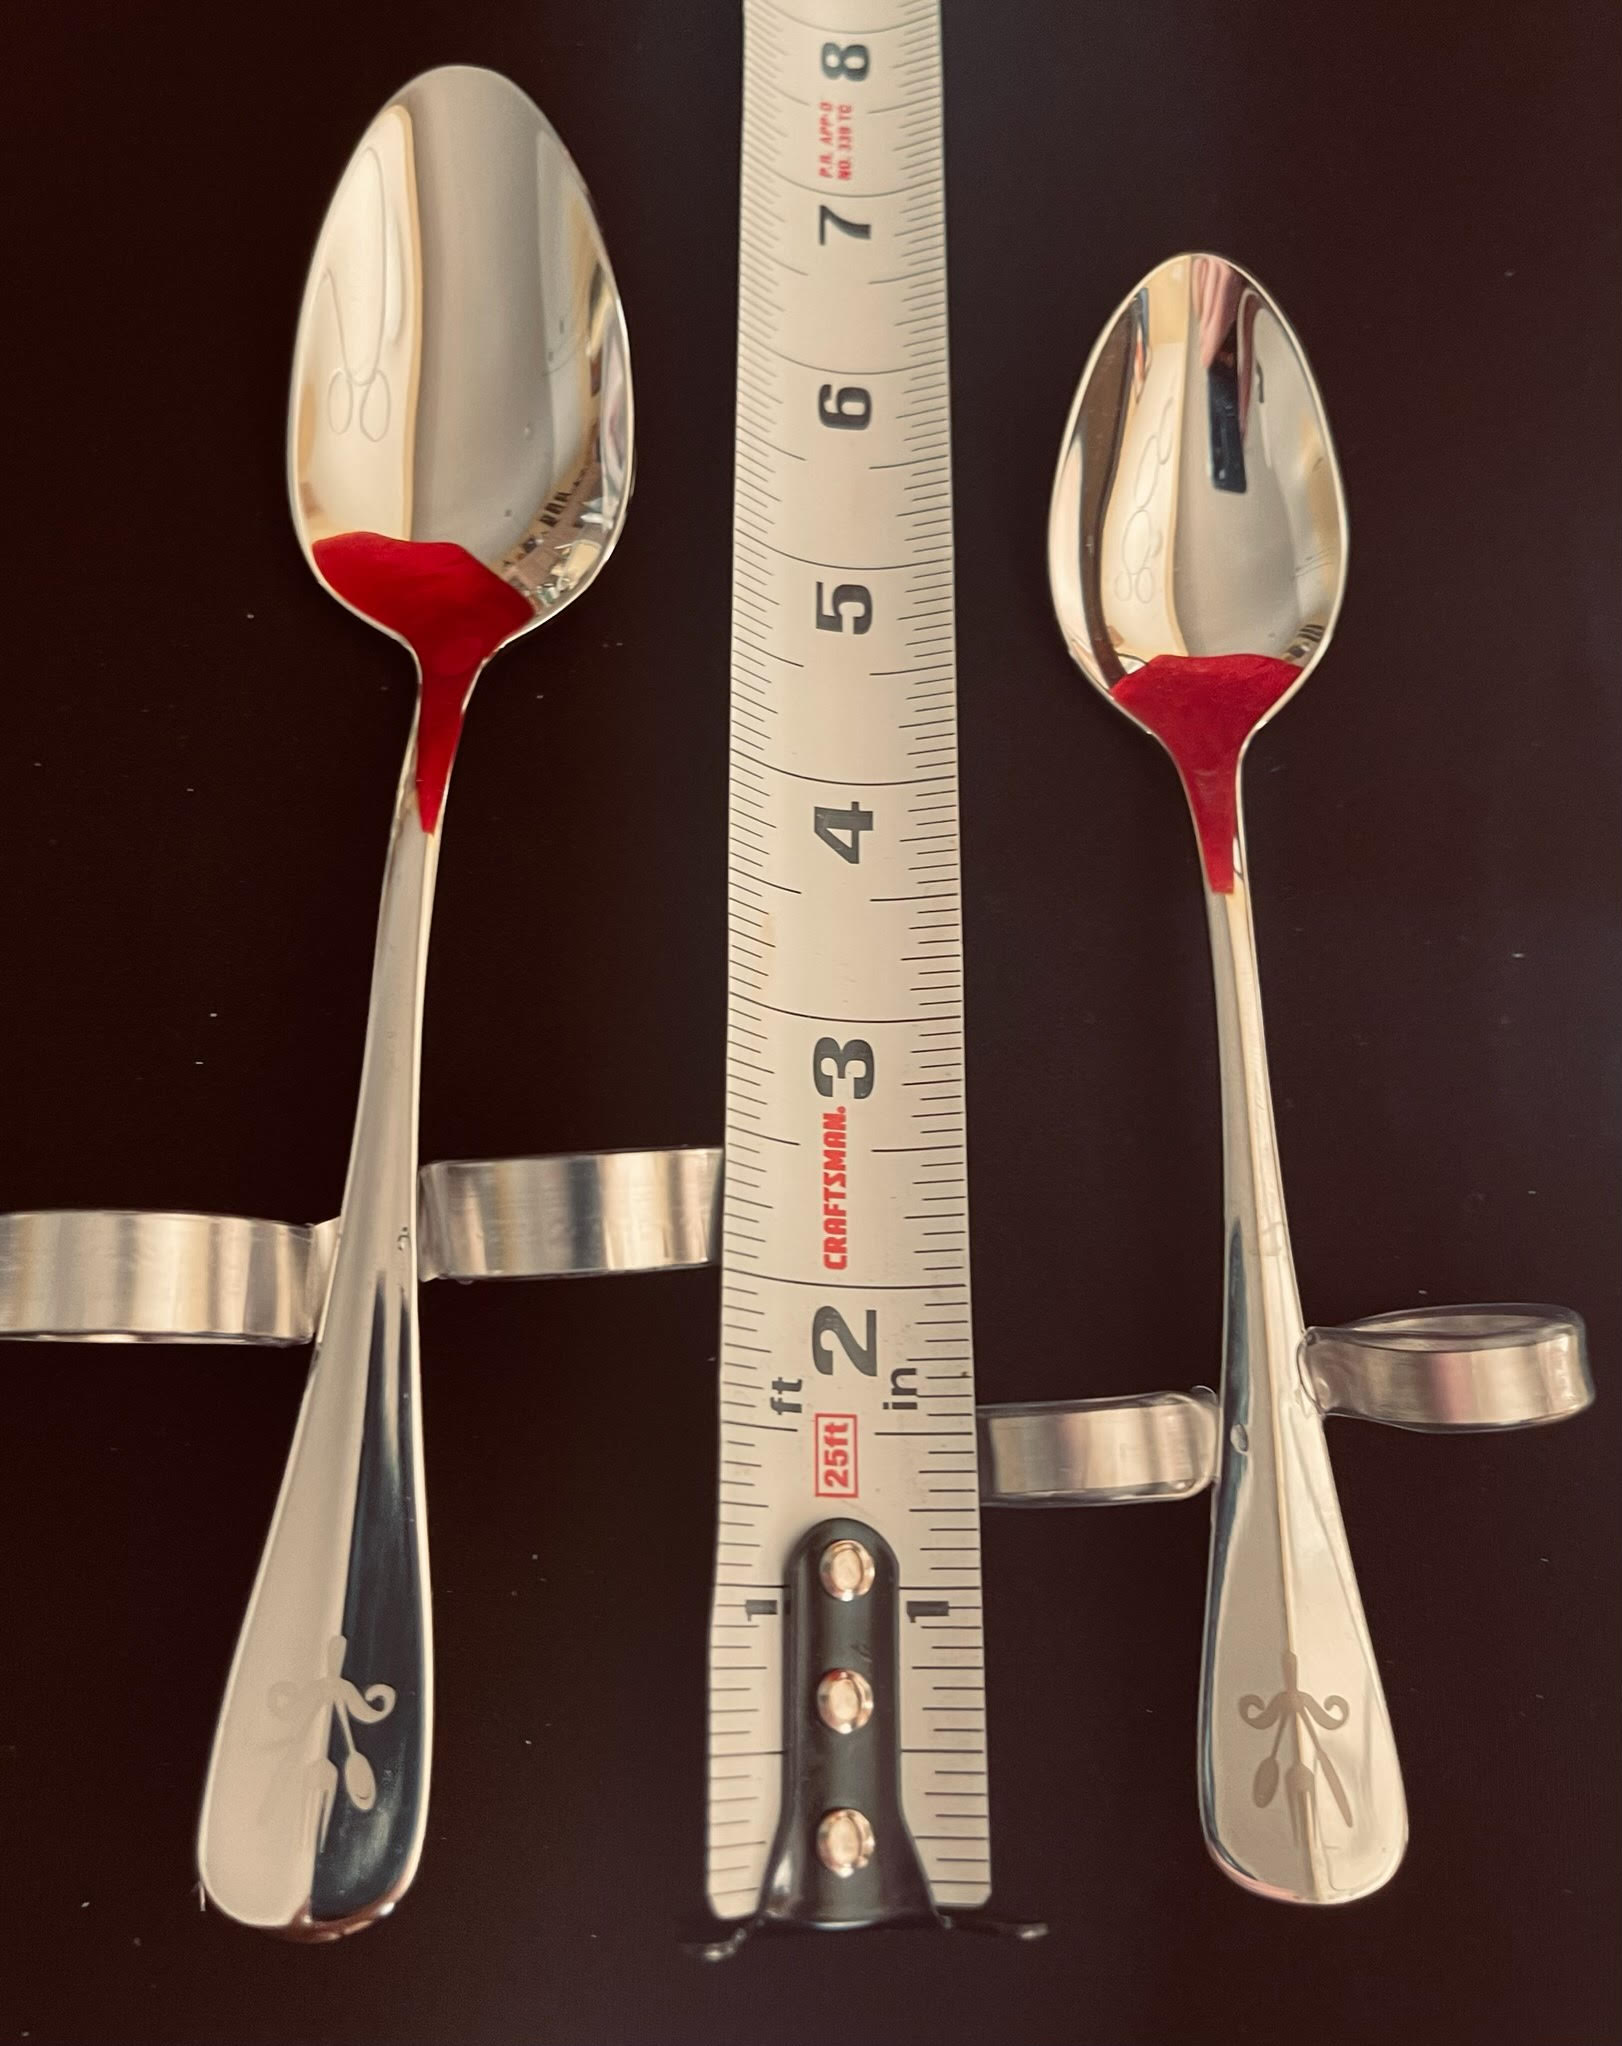 Adaptive Spoon - Regular Size Vs. Petite Size